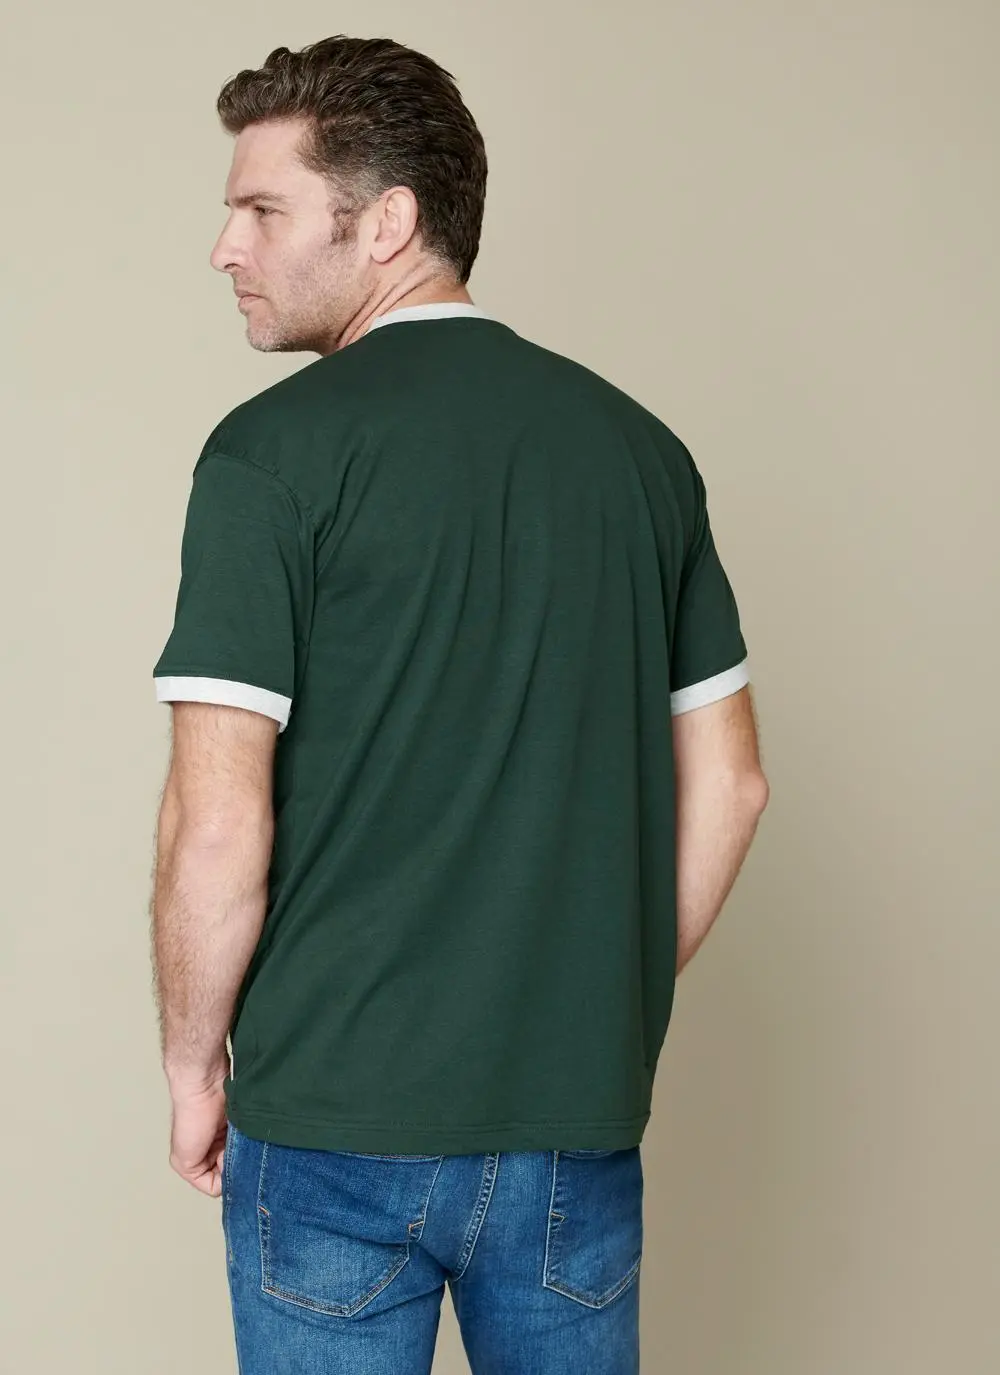 Blarney Exclusive Emerald Isle 1823 T-Shirt